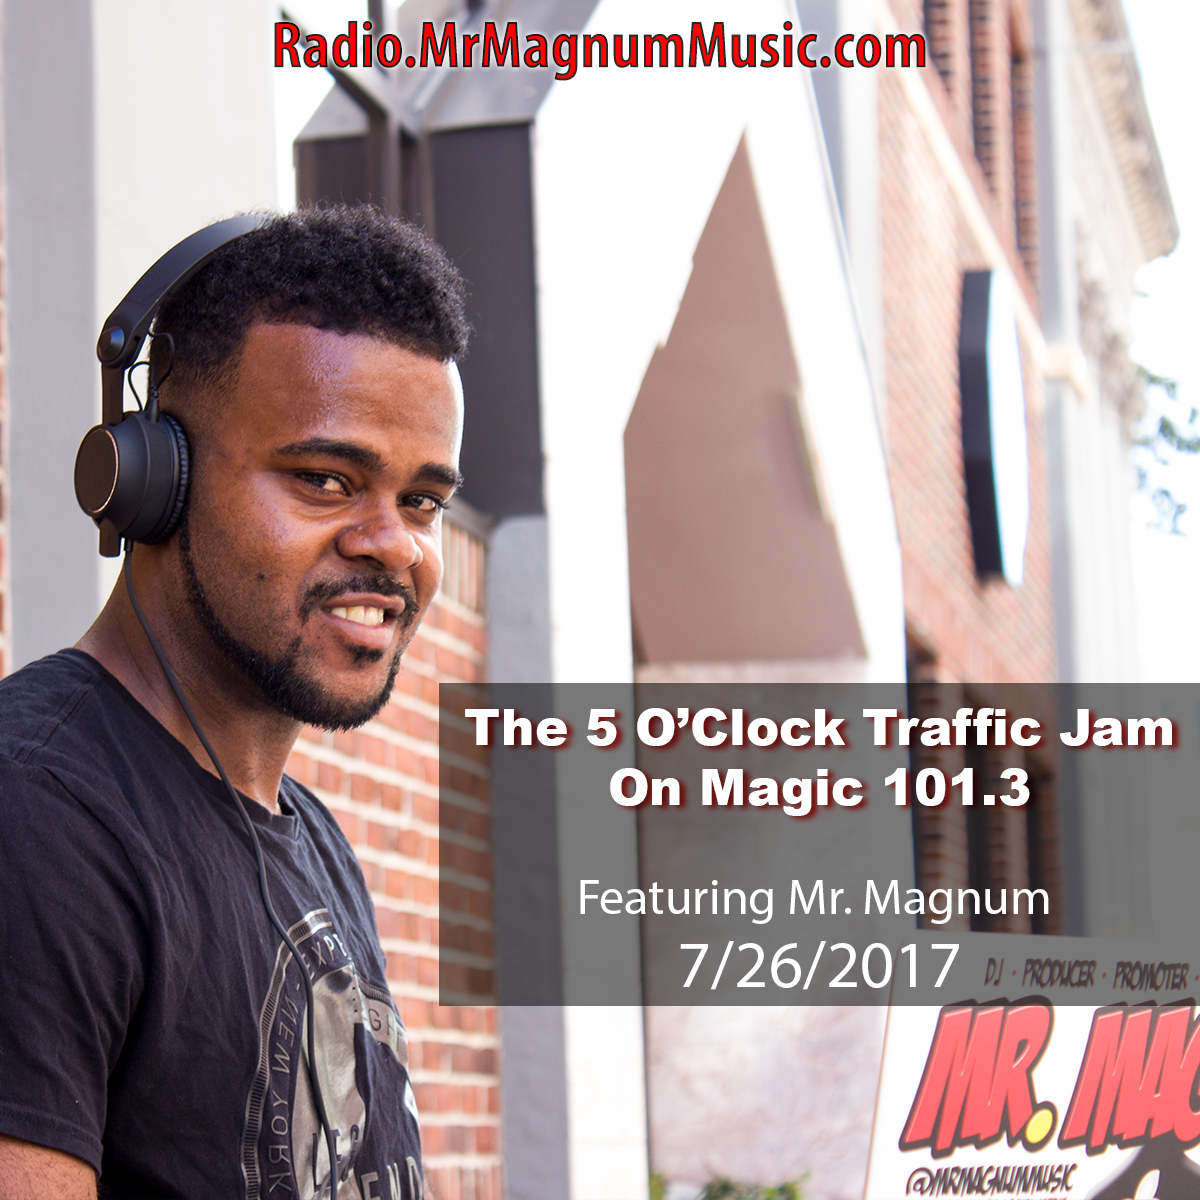 The 5 O'Clock Traffic Jam 20170726 featuring Gainesville's #1 DJ, Mr. Magnum on Magic 101.3